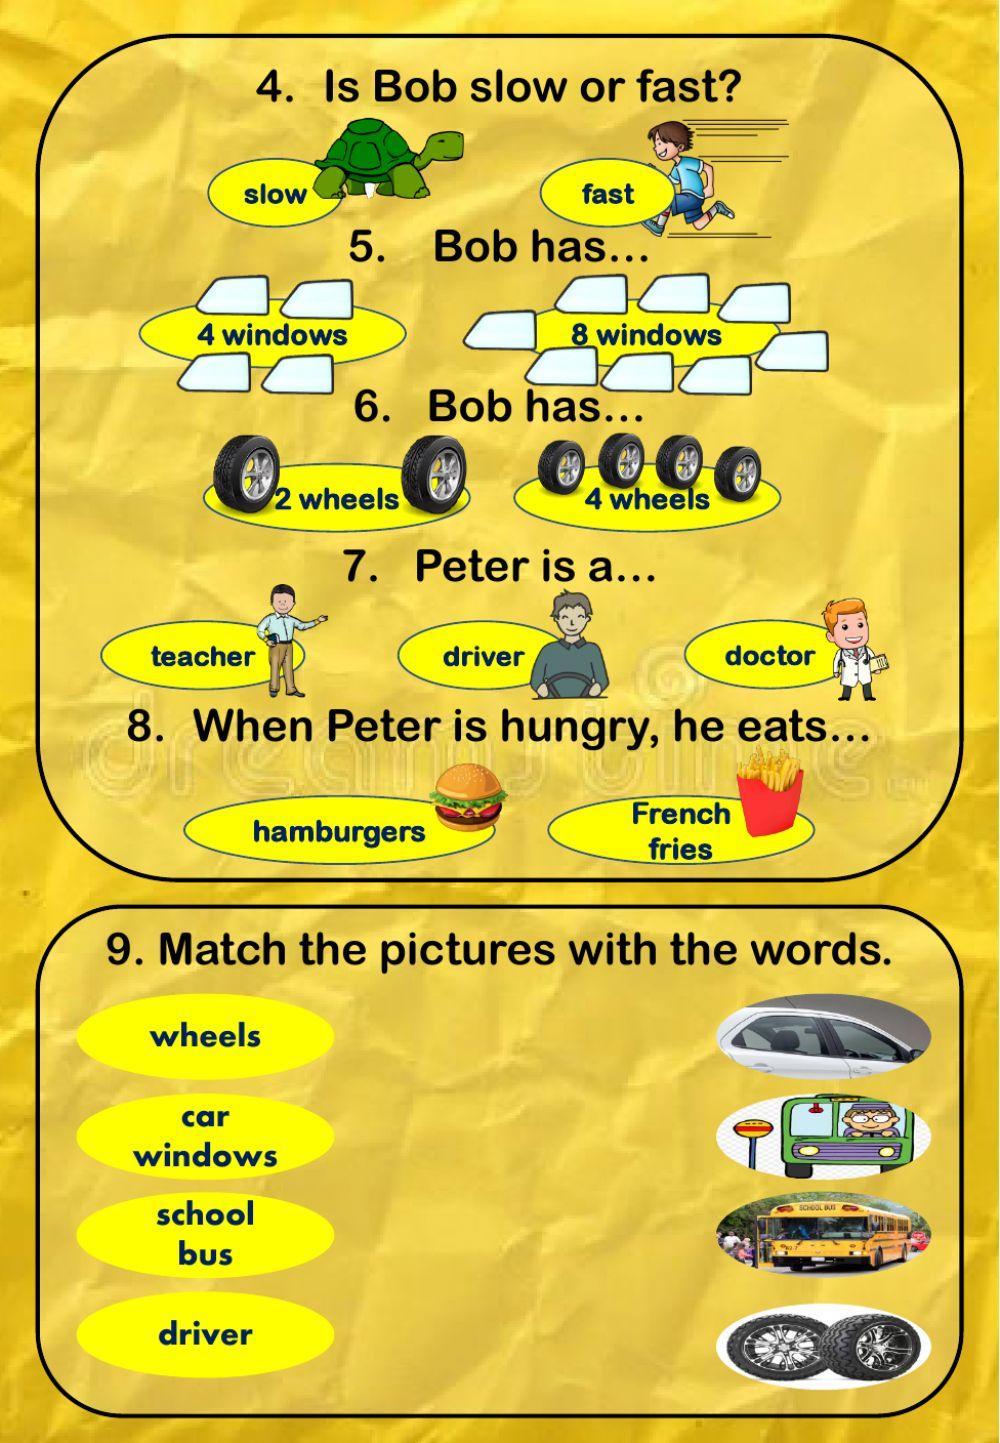 Bob the bus - Reading Comprehension